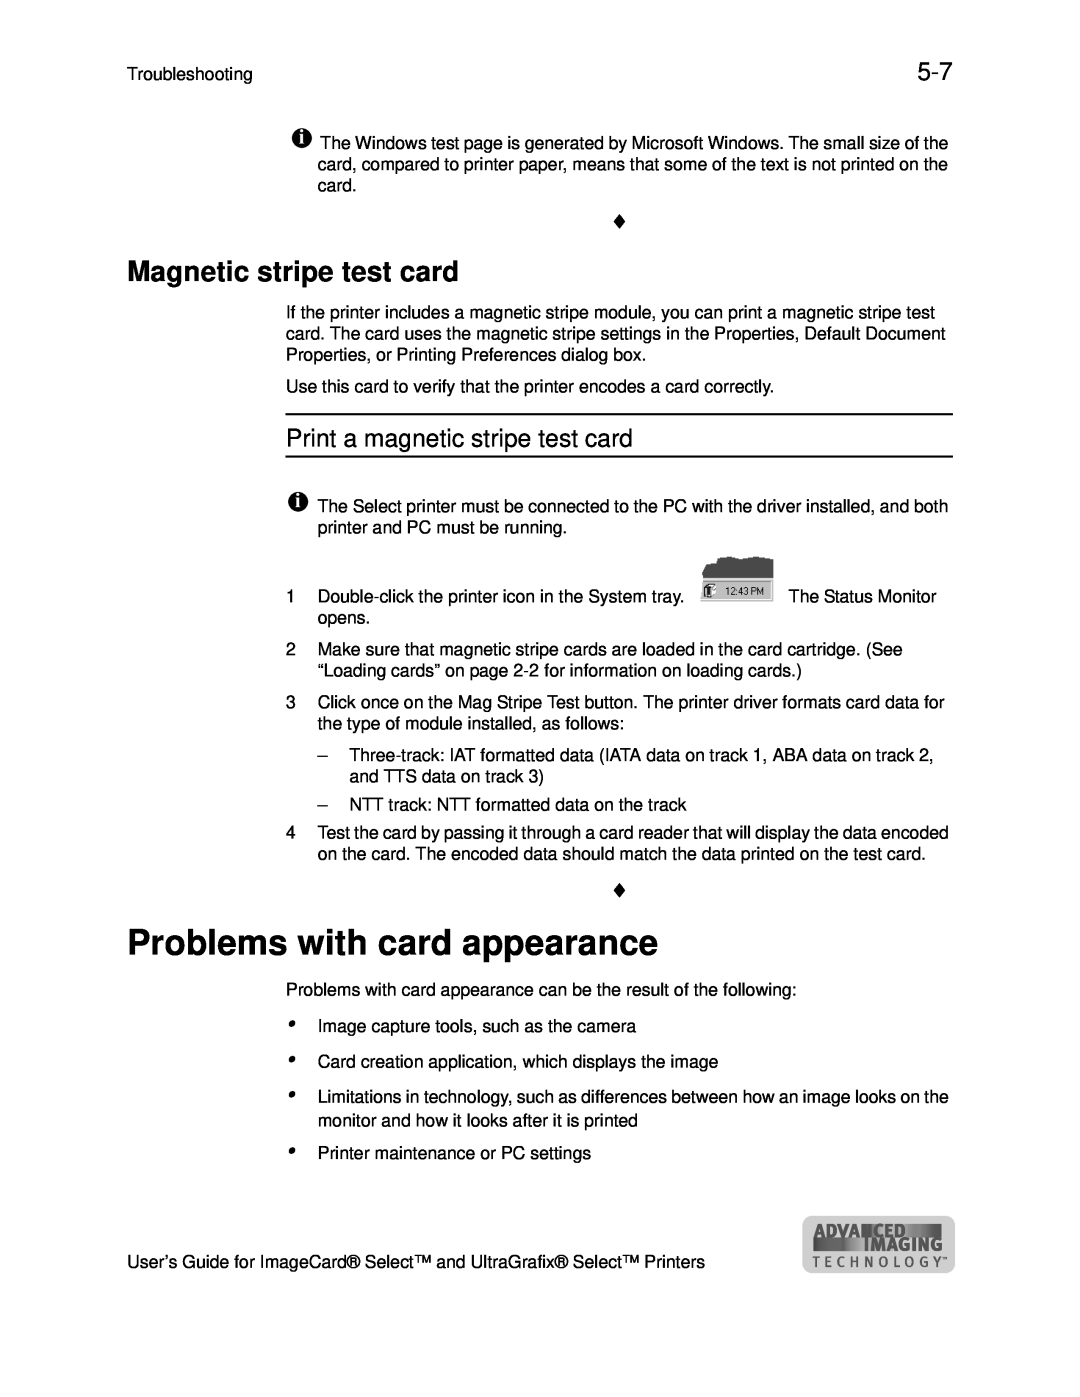 Datacard Group ImageCard SelectTM and UltraGrafix SelectTM Printers manual Problems with card appearance 